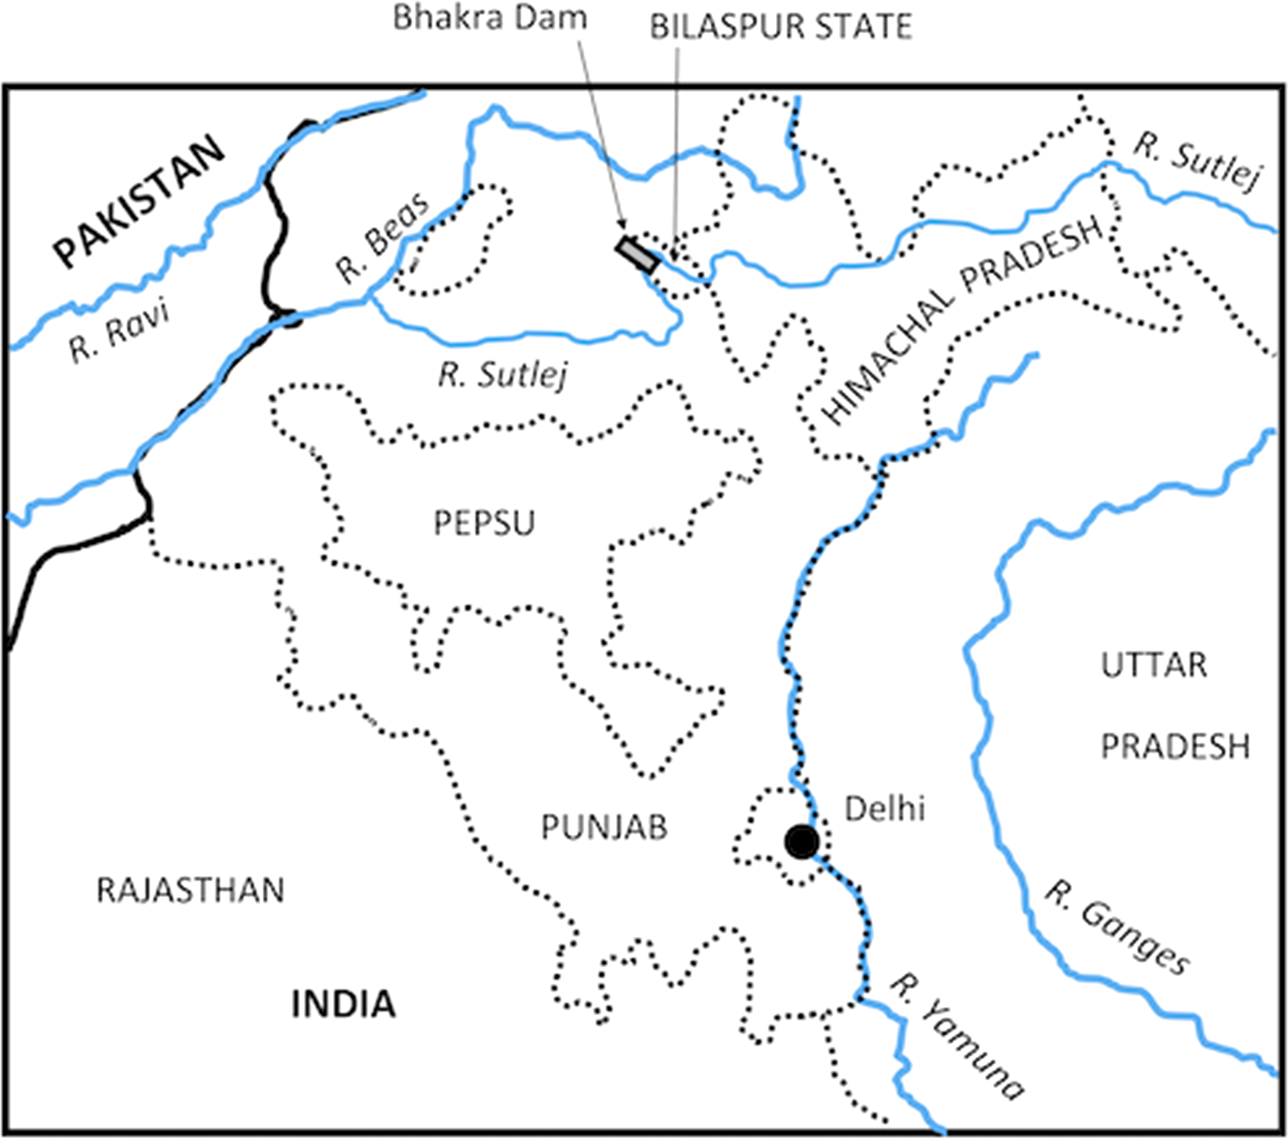 bhakra nangal dam